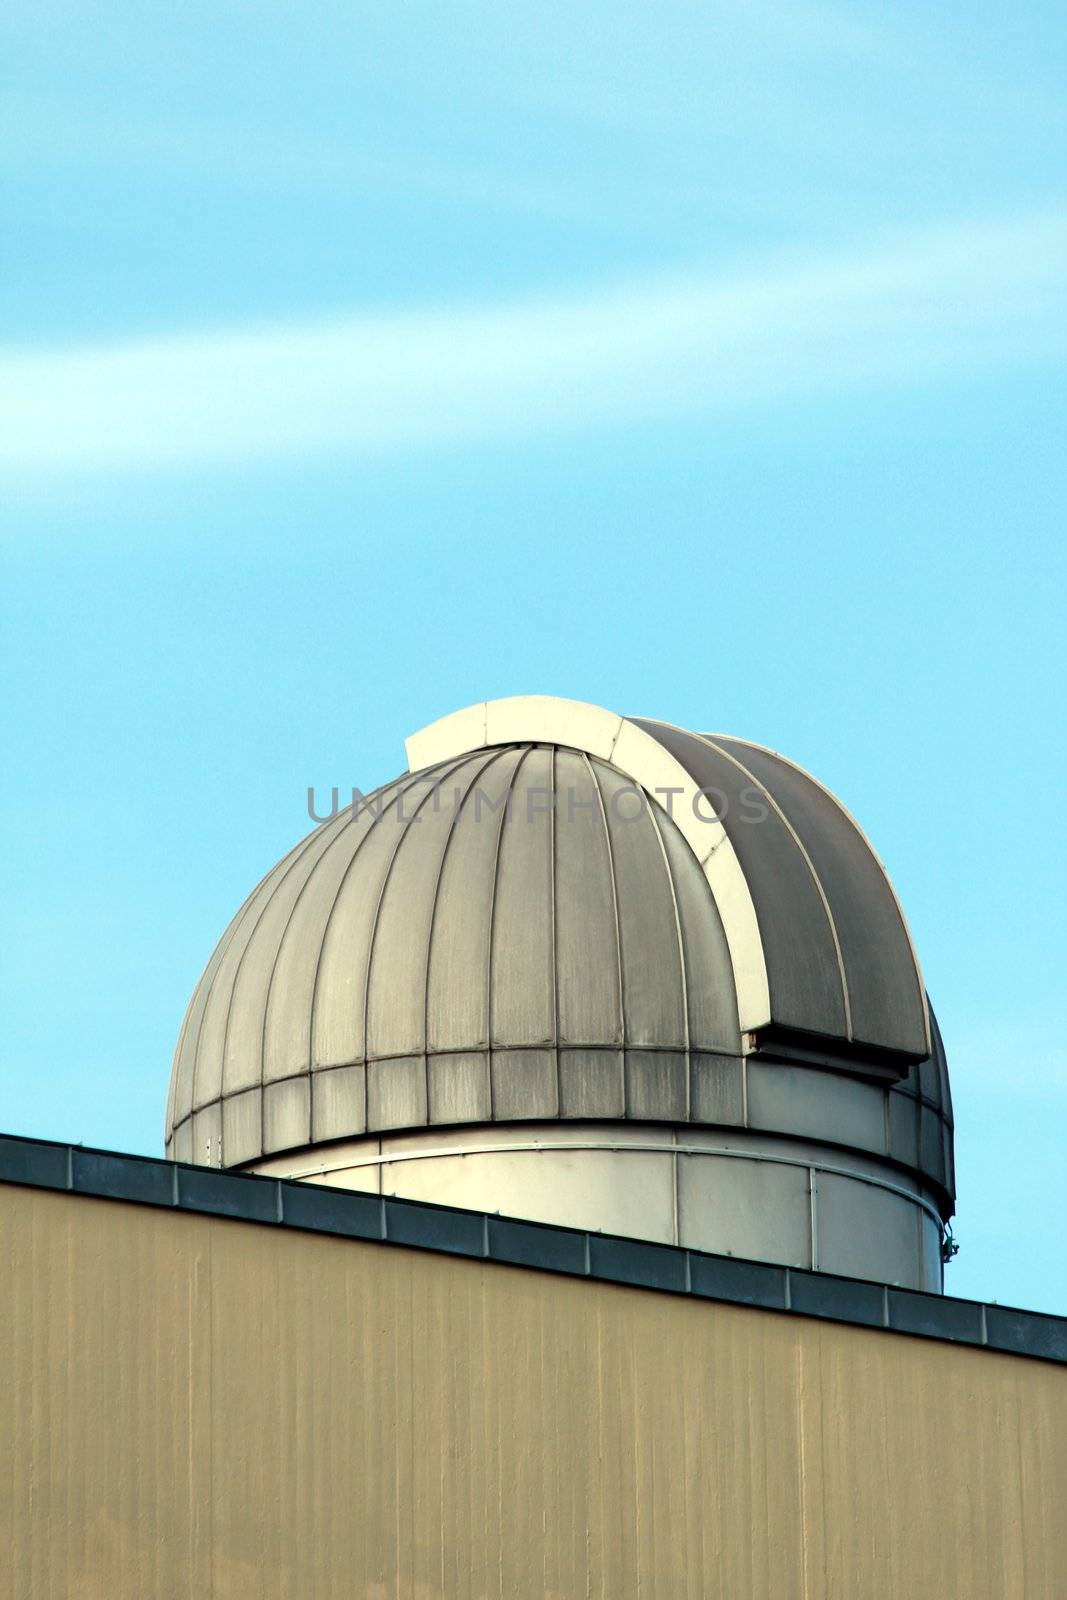 observatory dome by Teka77